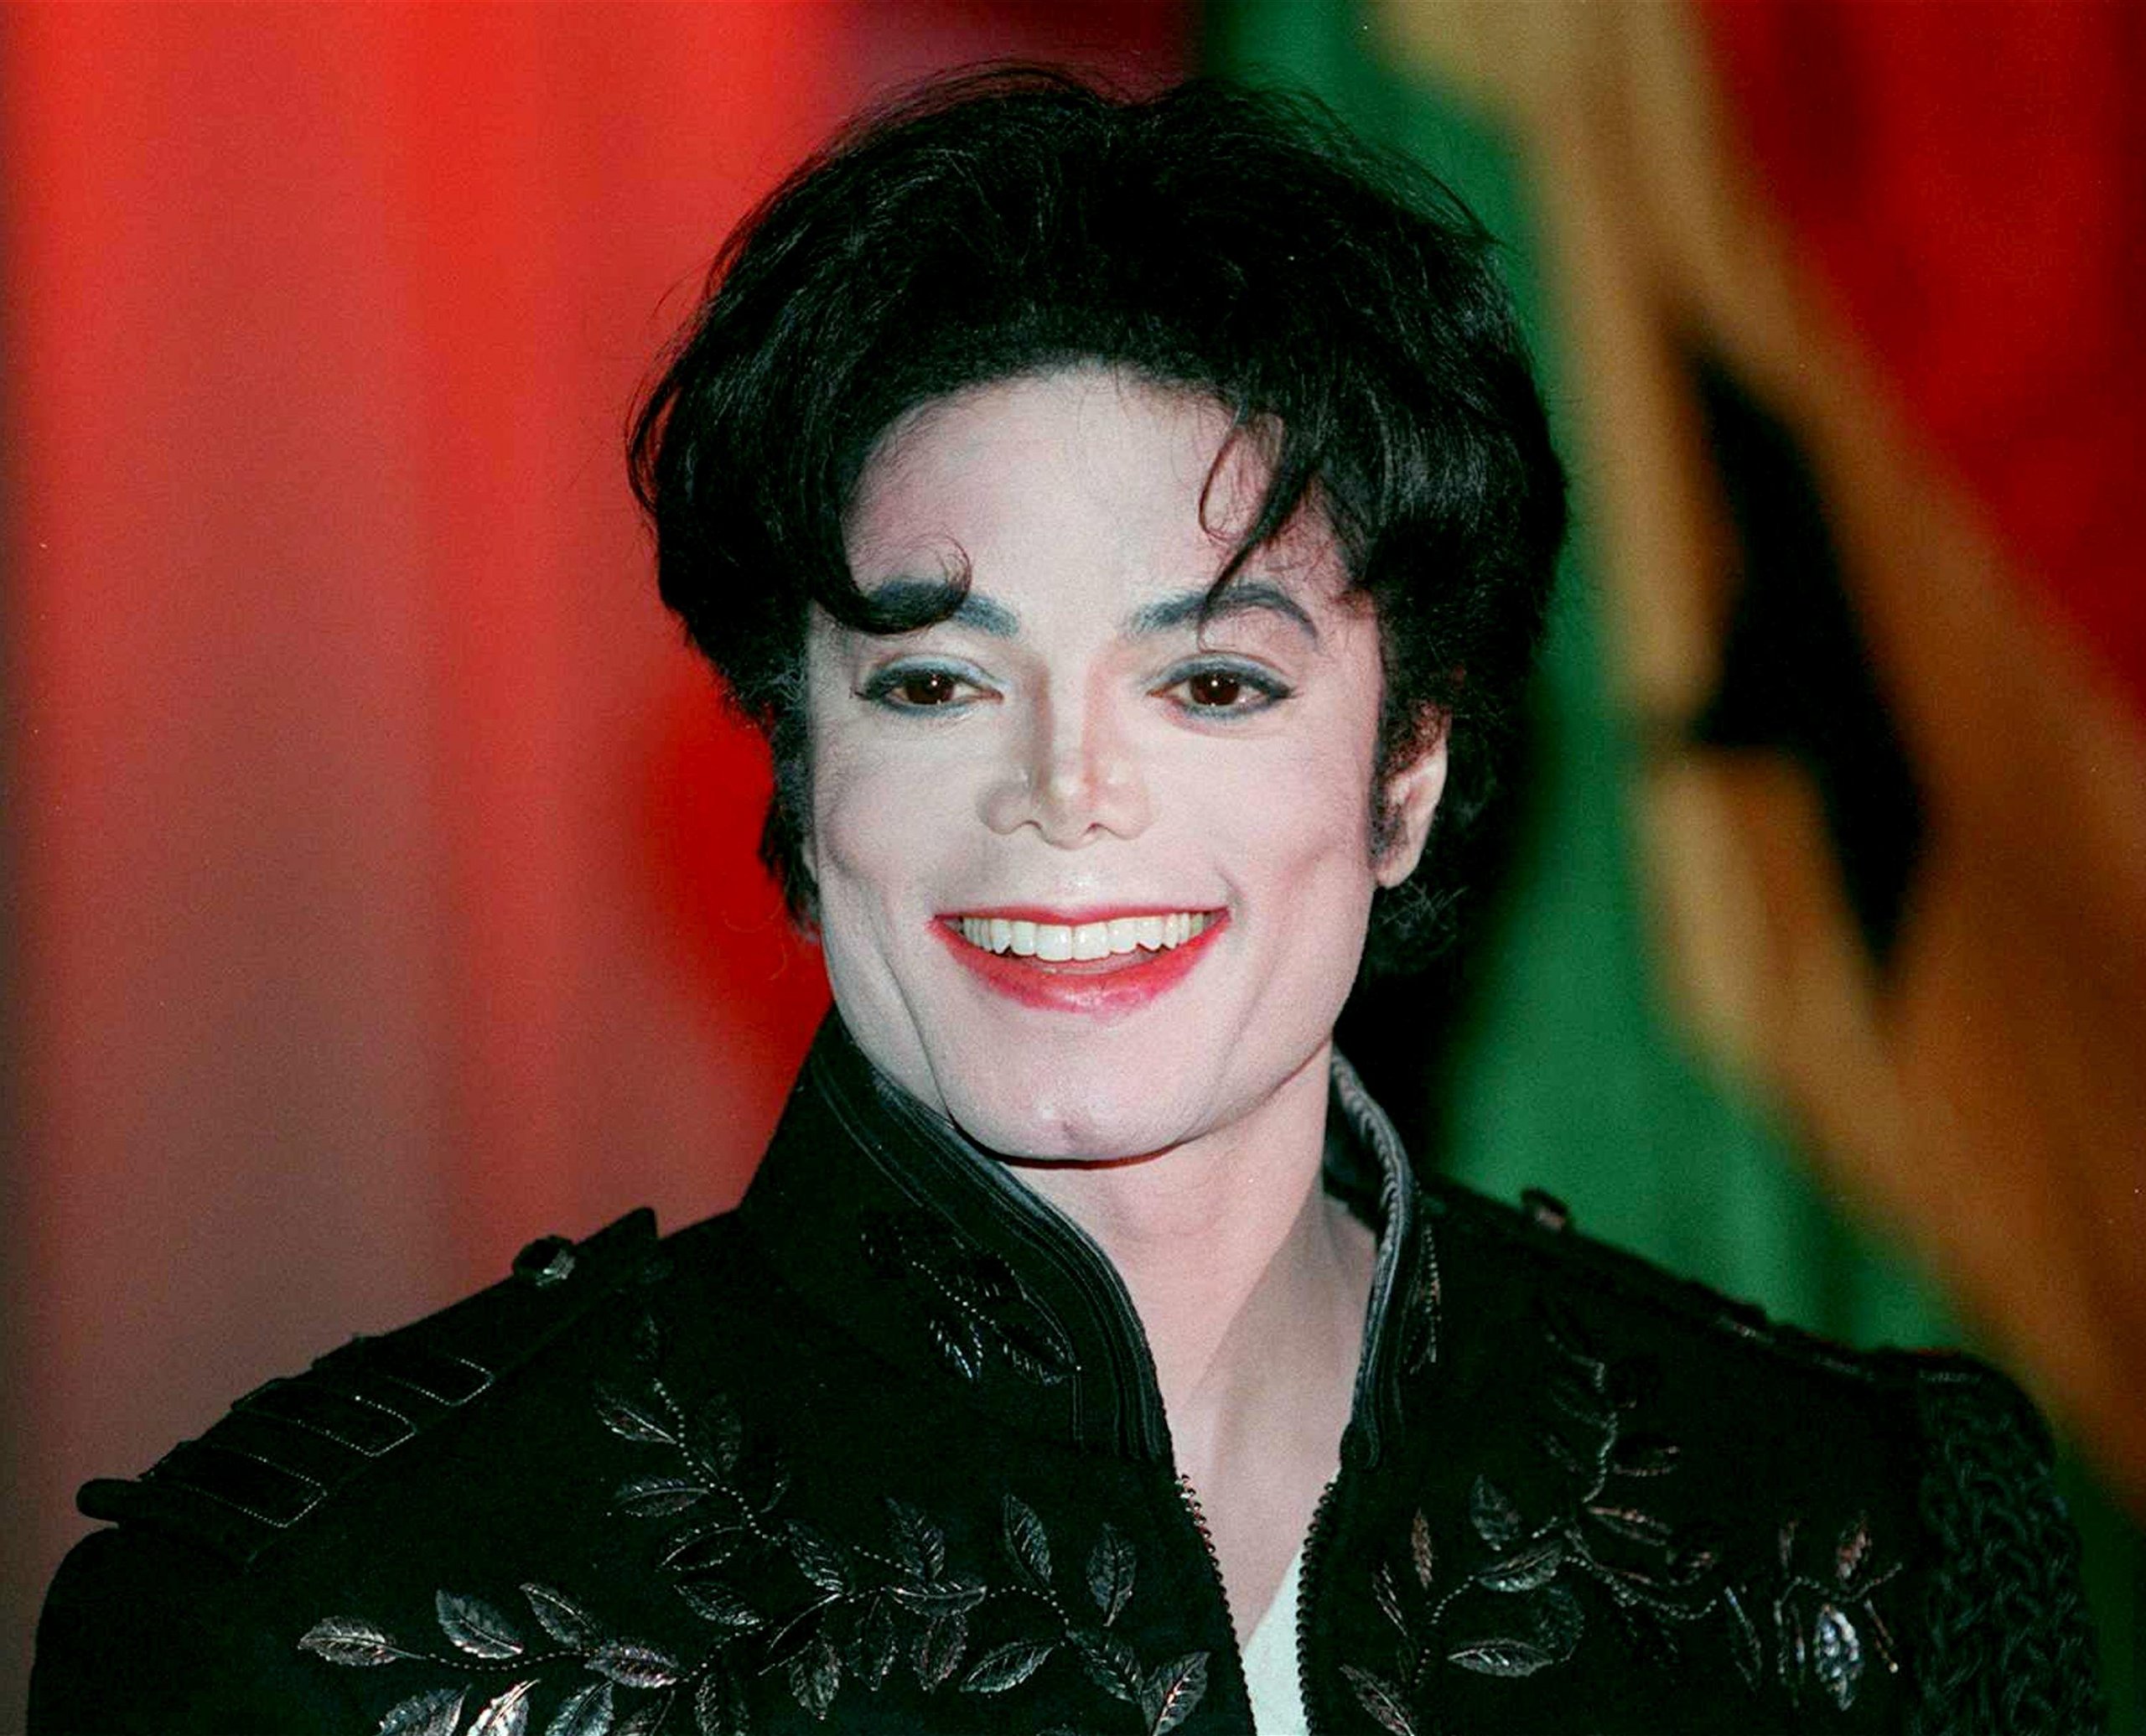 Michael Jackson Pictures - 40 Magnificent Collections | Design Press